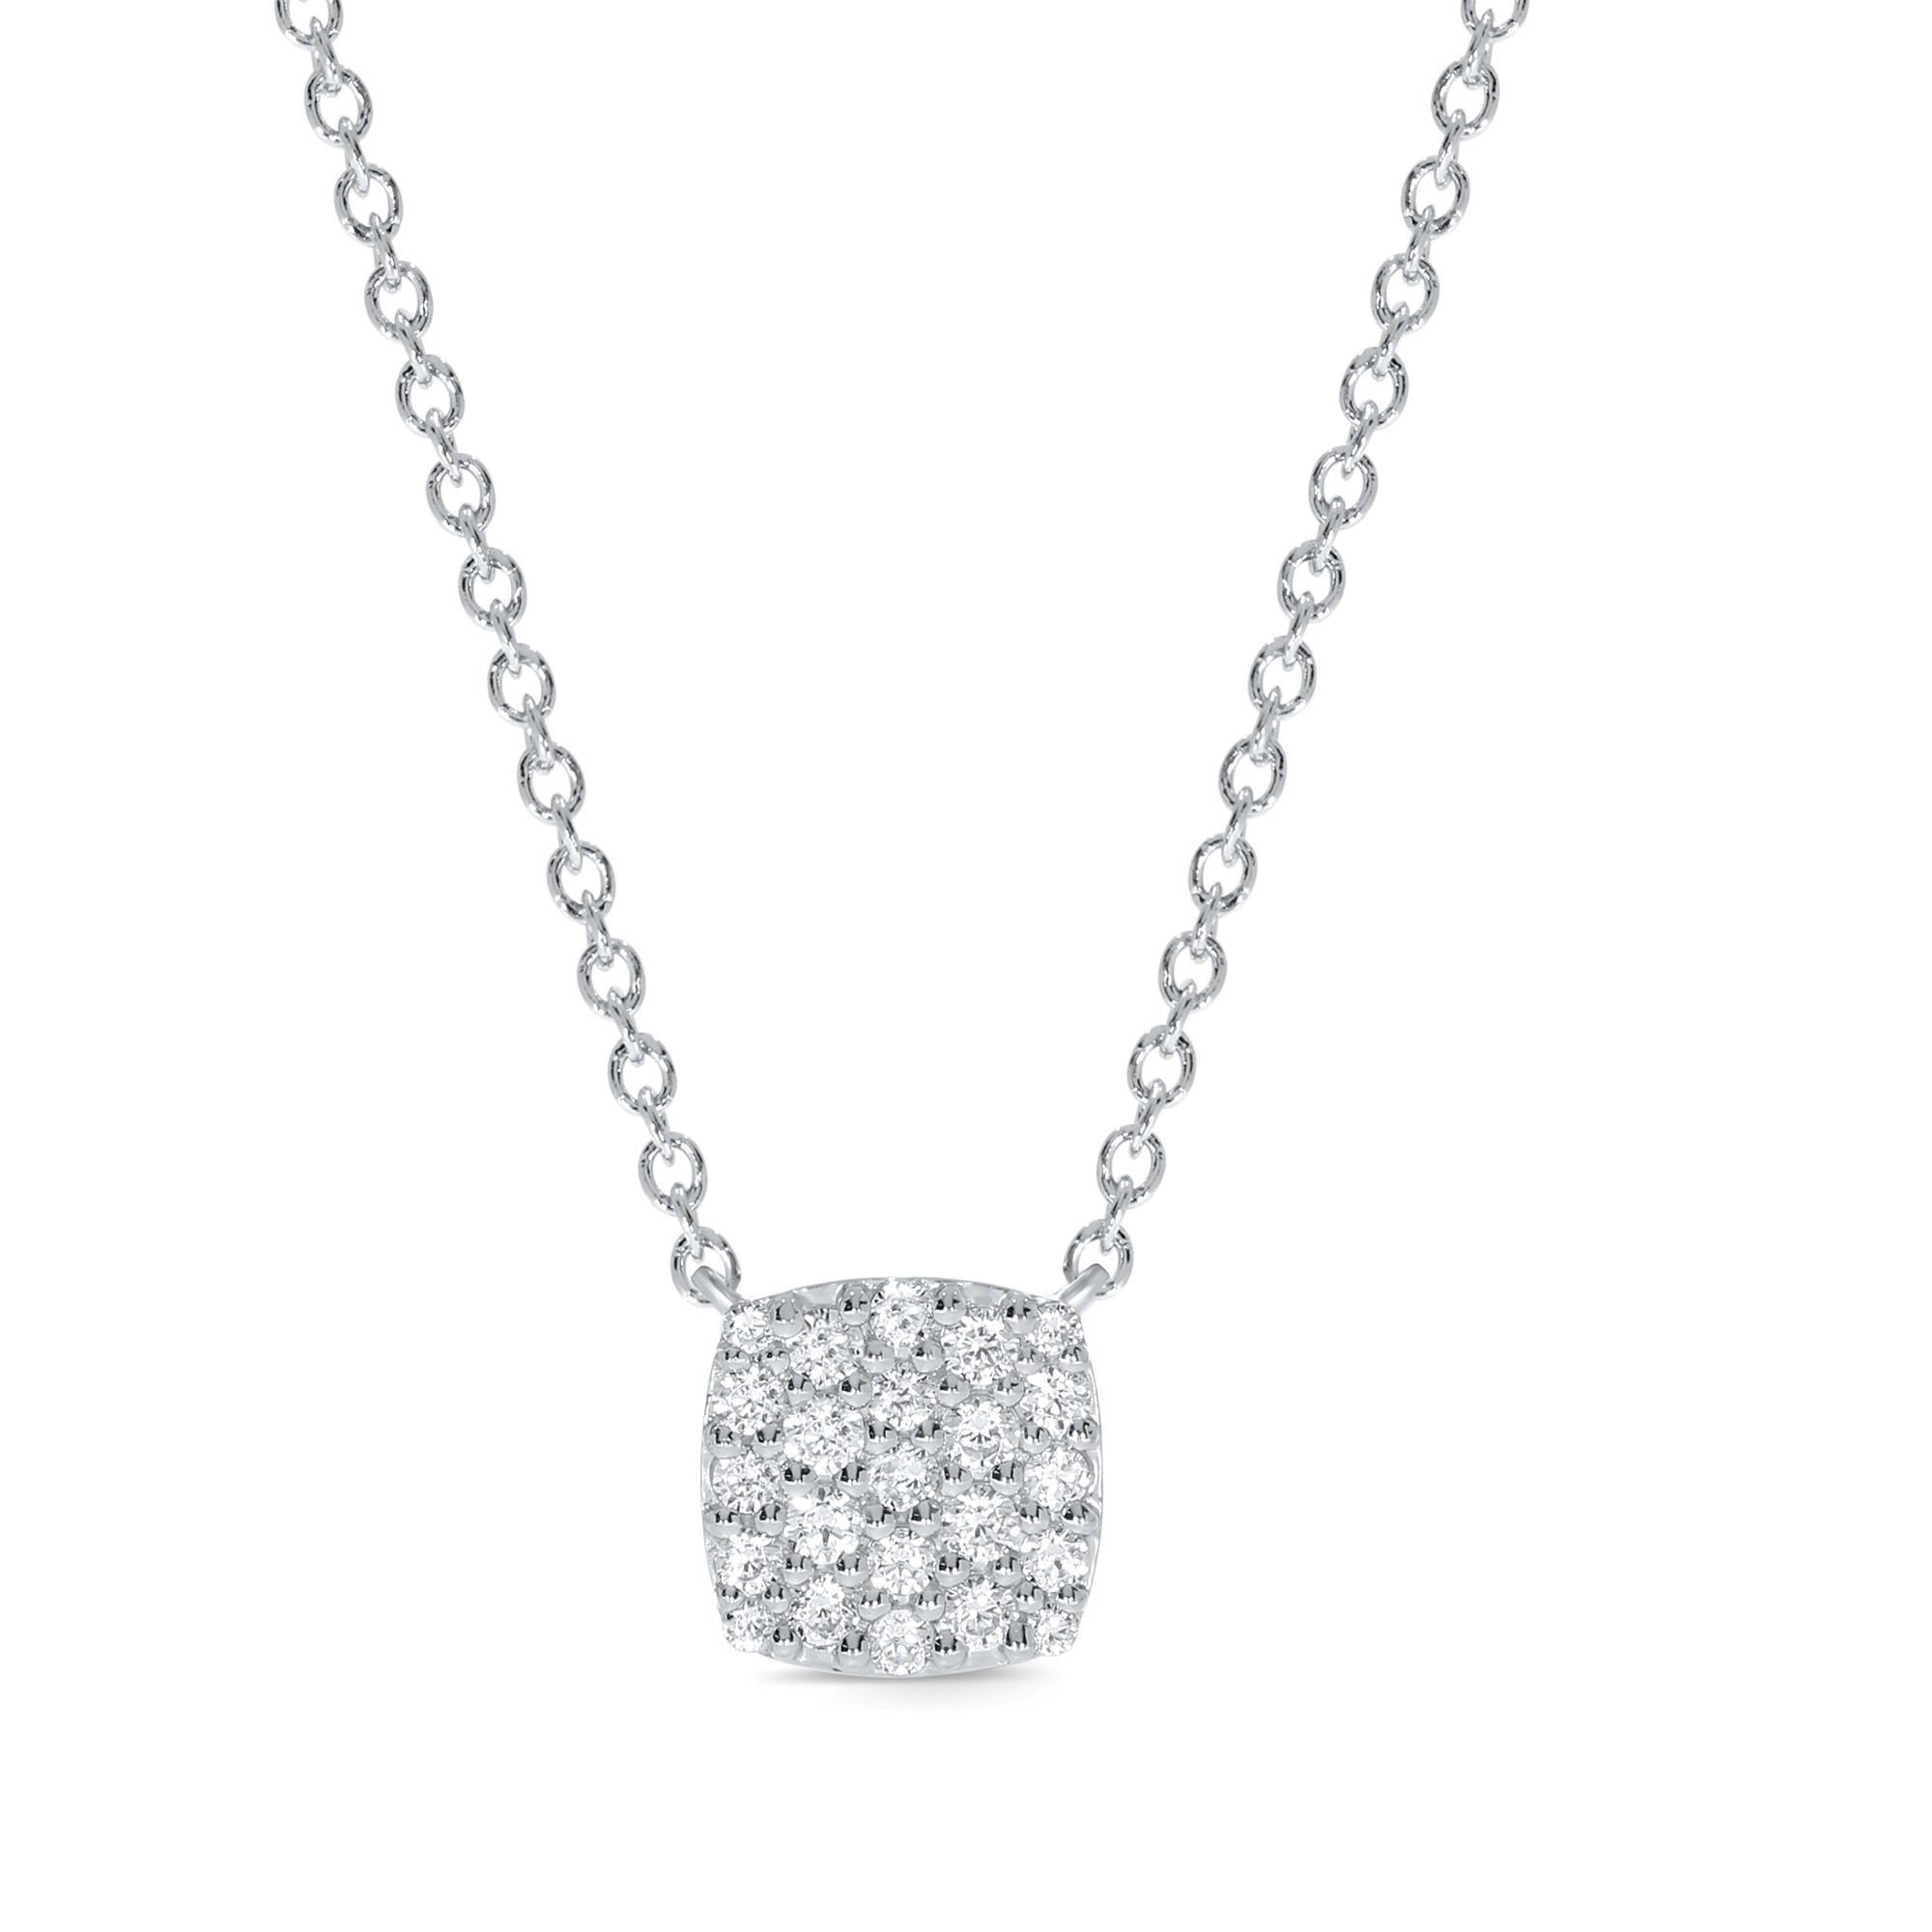 10Kw .20Cttw Sq. Cluster Diamond Necklace